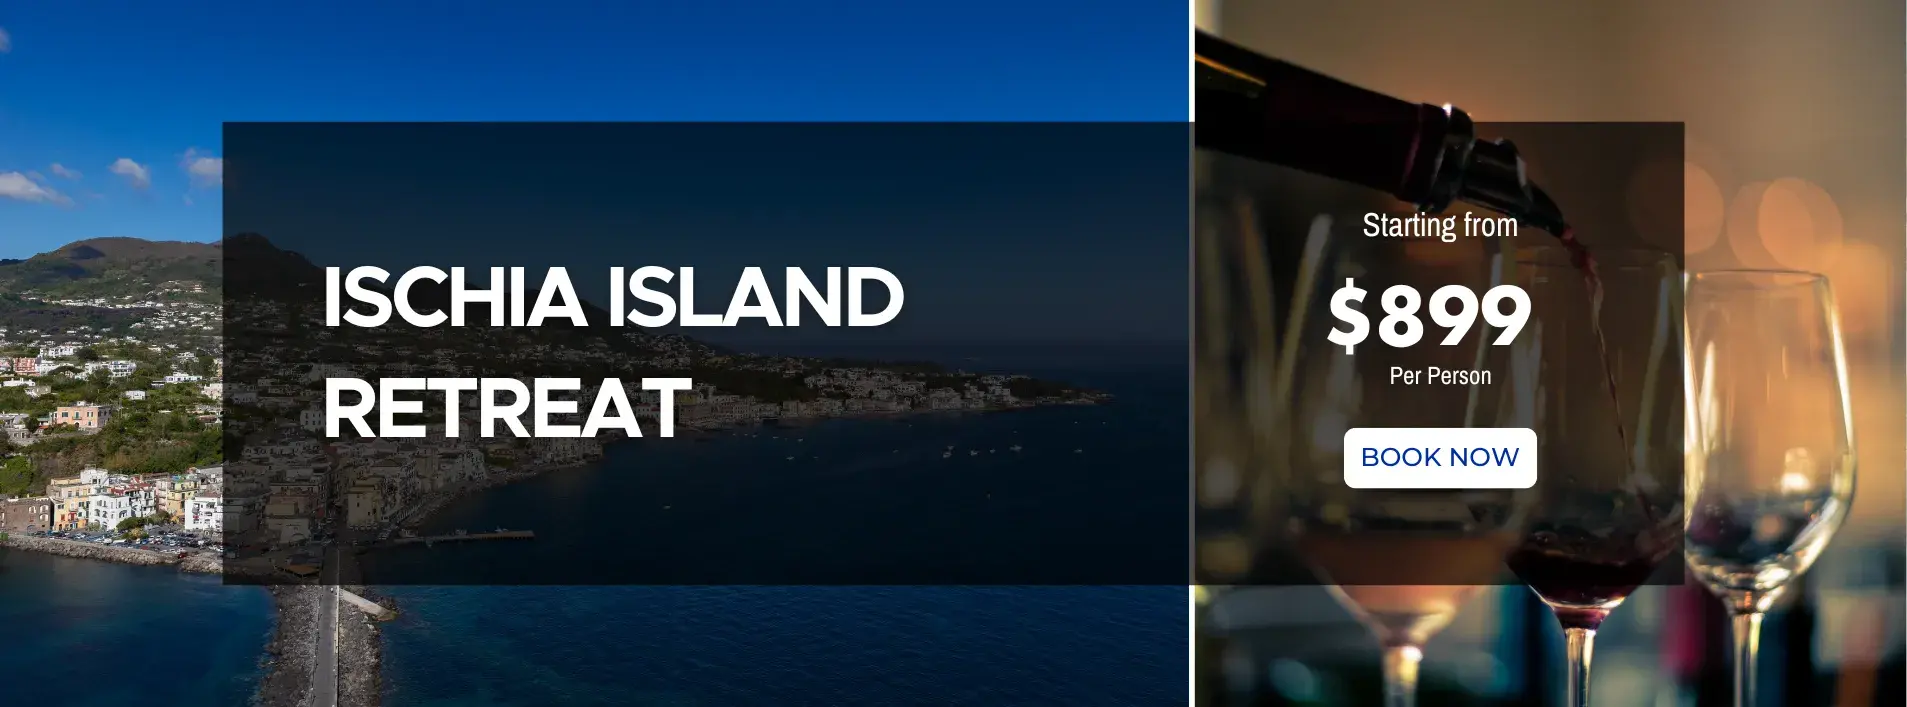 Ischia Island Retreat W/Air and Wine Tasting Tour